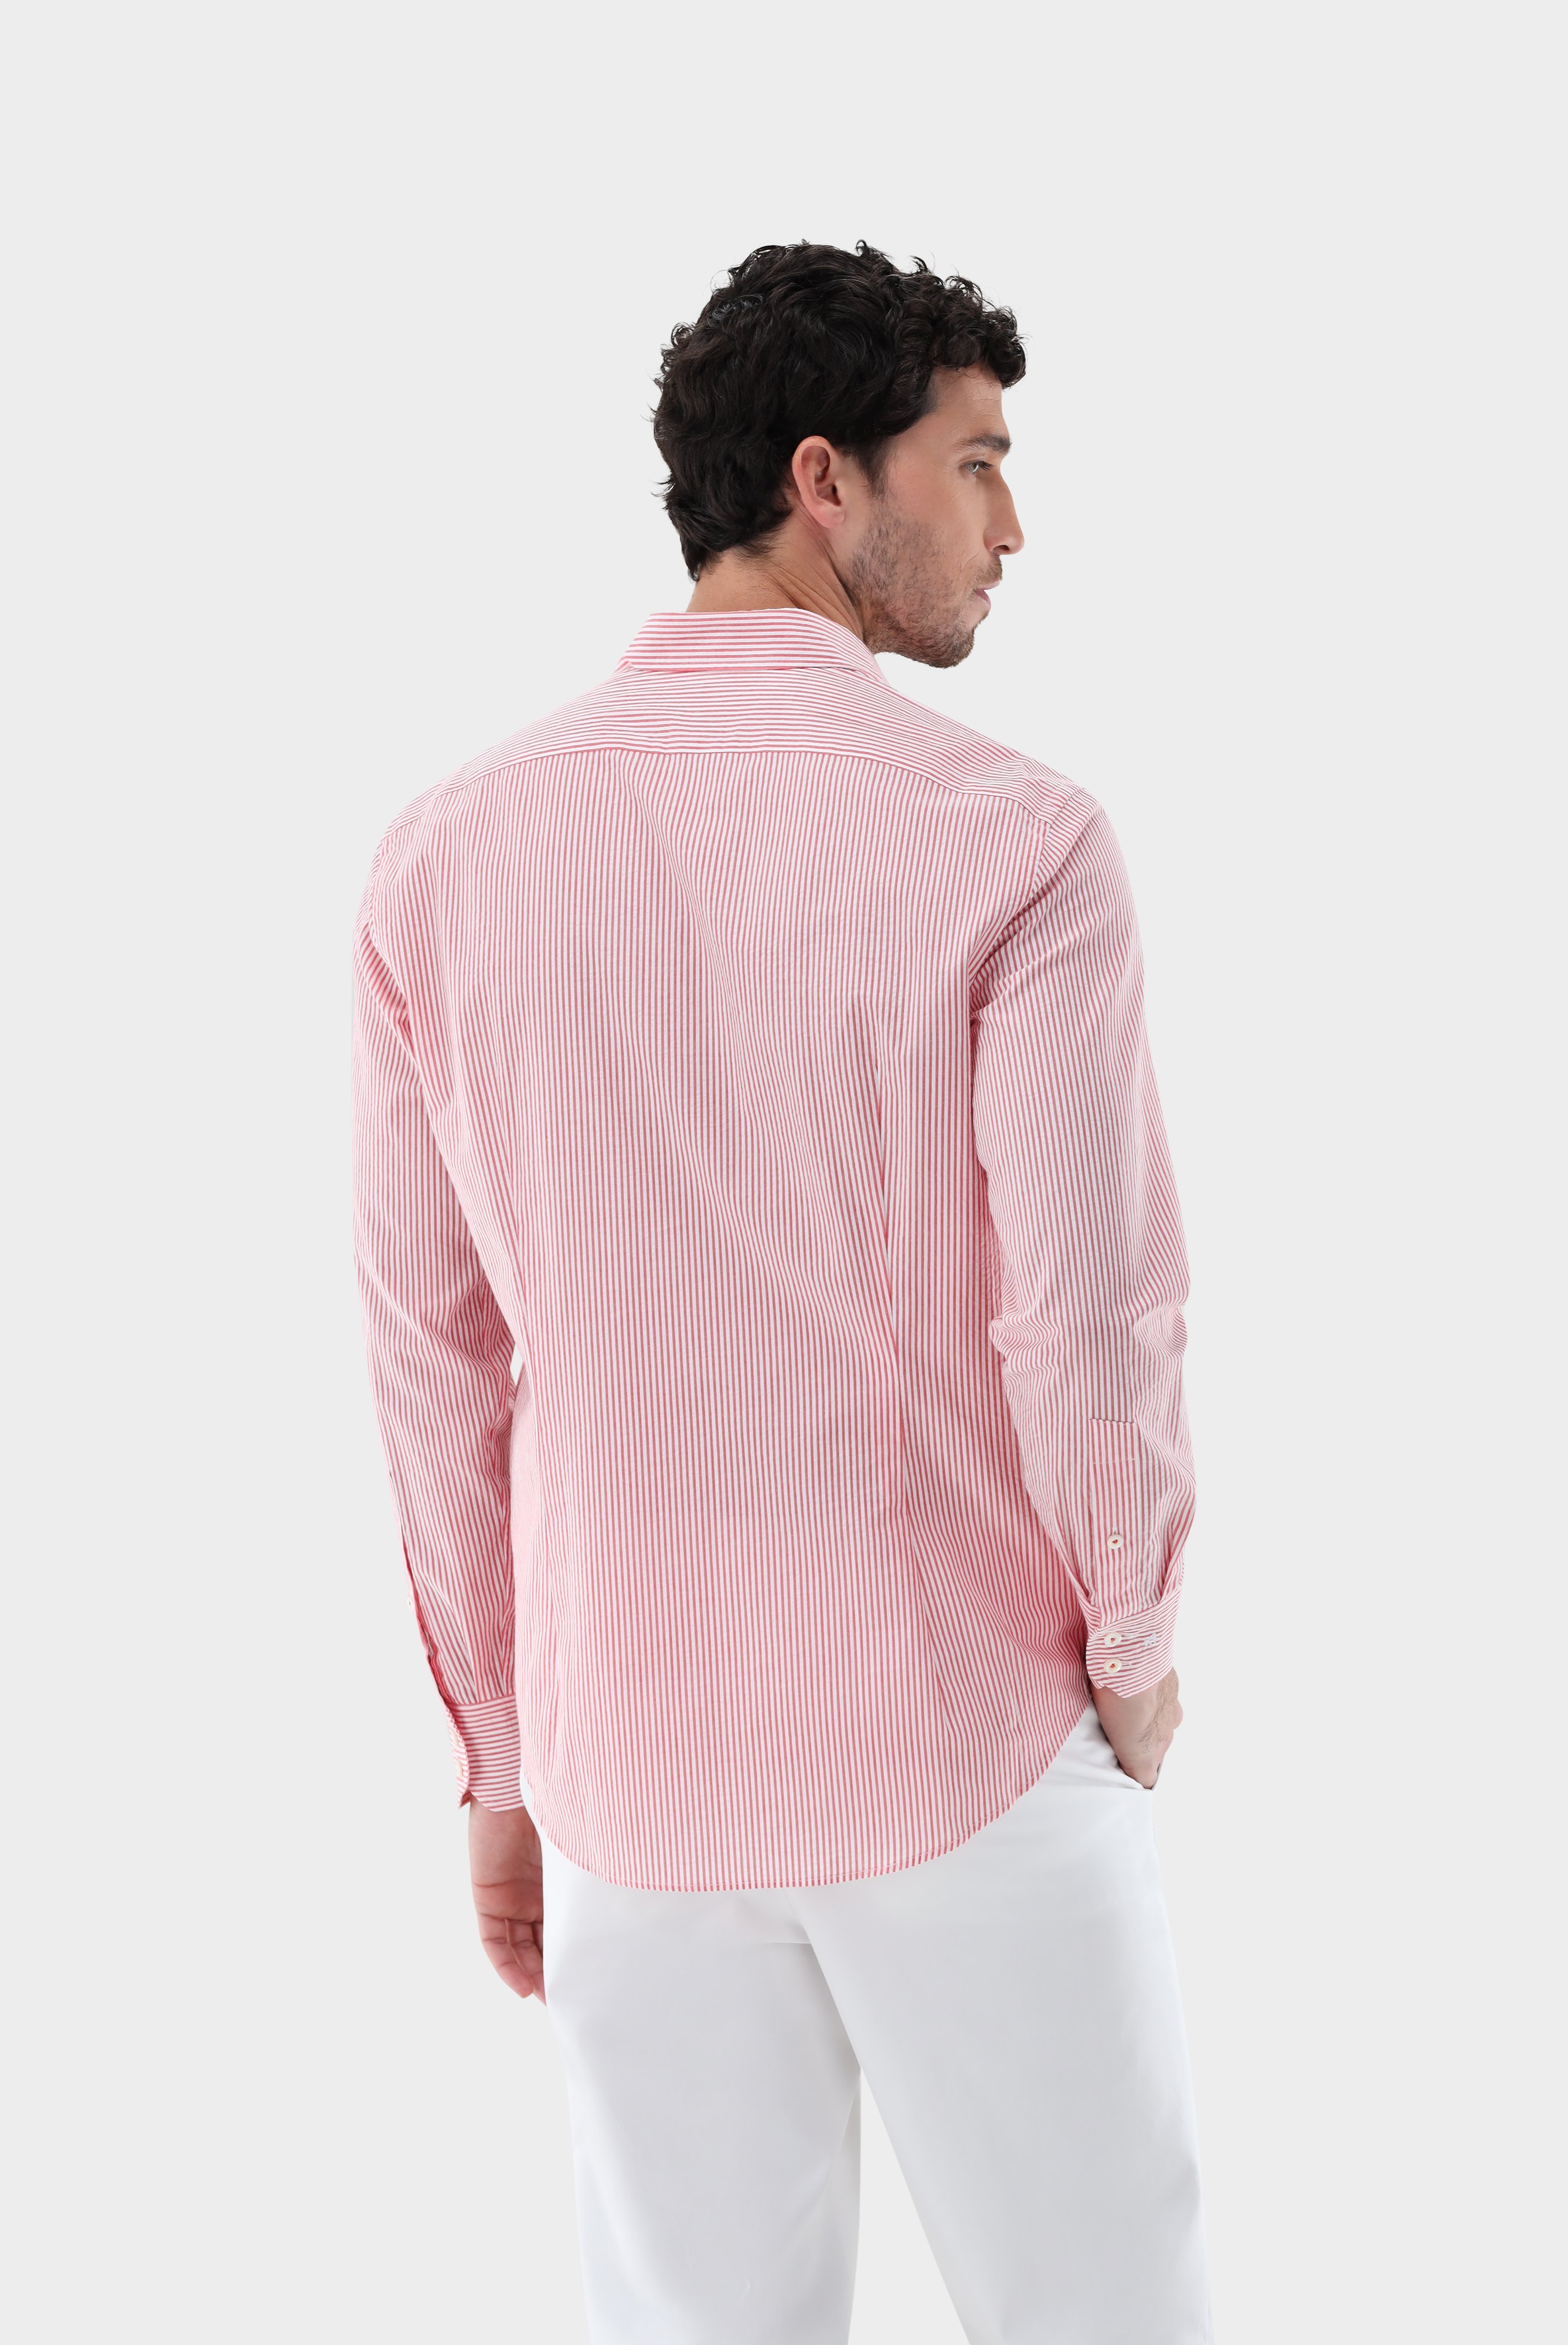 Casual Hemden+Gestreiftes Hemd aus Baumwoll-Seersucker Tailor Fit+20.2011.AV.151054.550.40